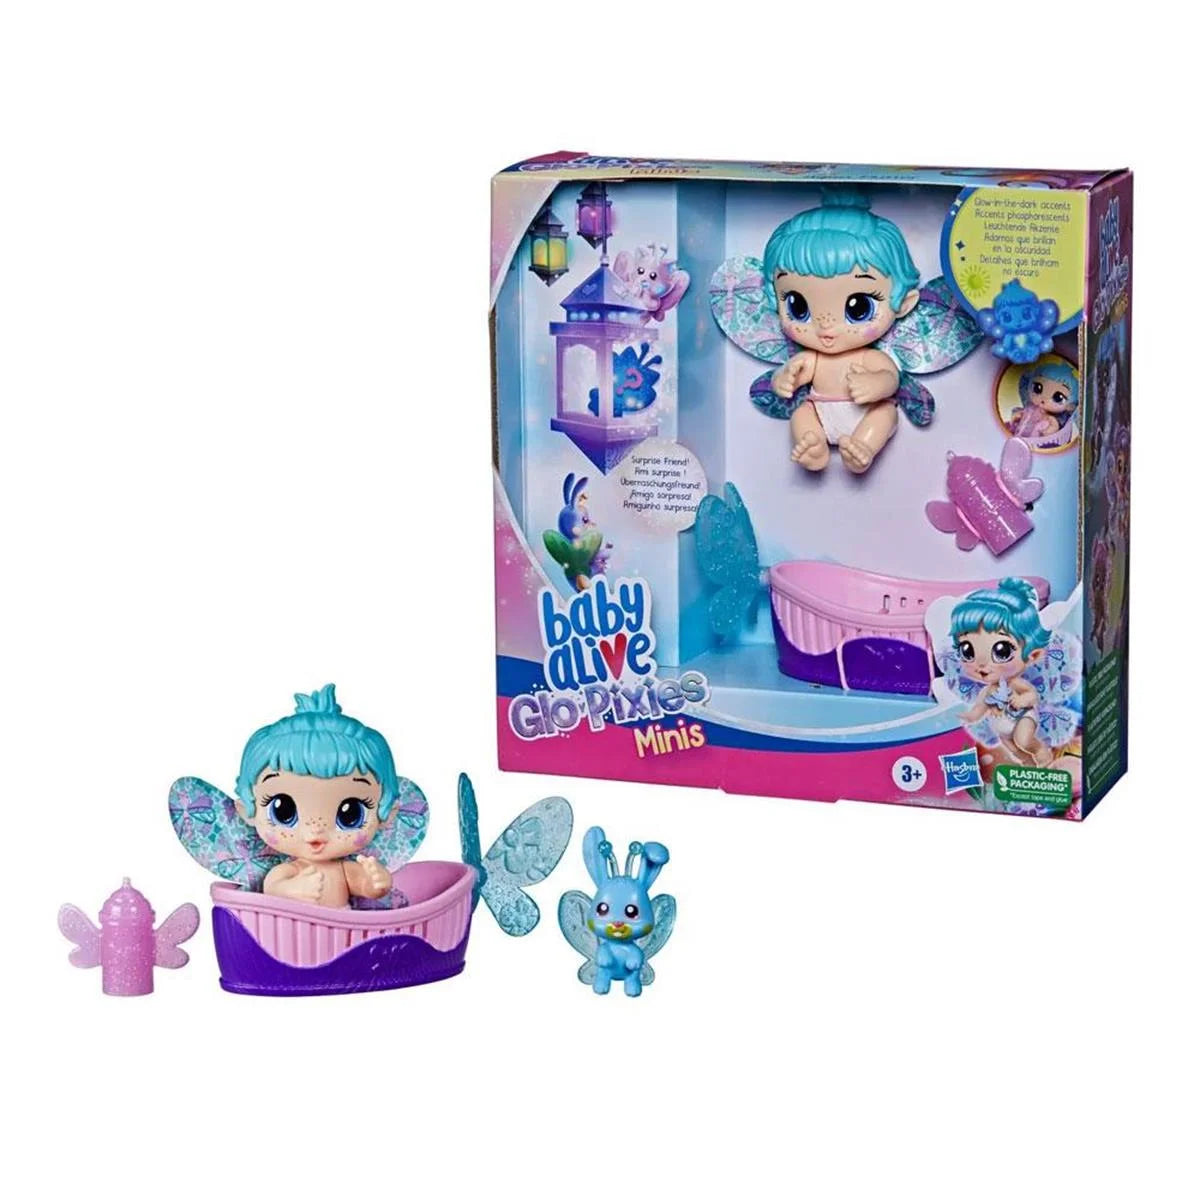 Baby Alive Glopixies Minik Peri Bebek Aqua Flutter F2437-F2599 | Toysall